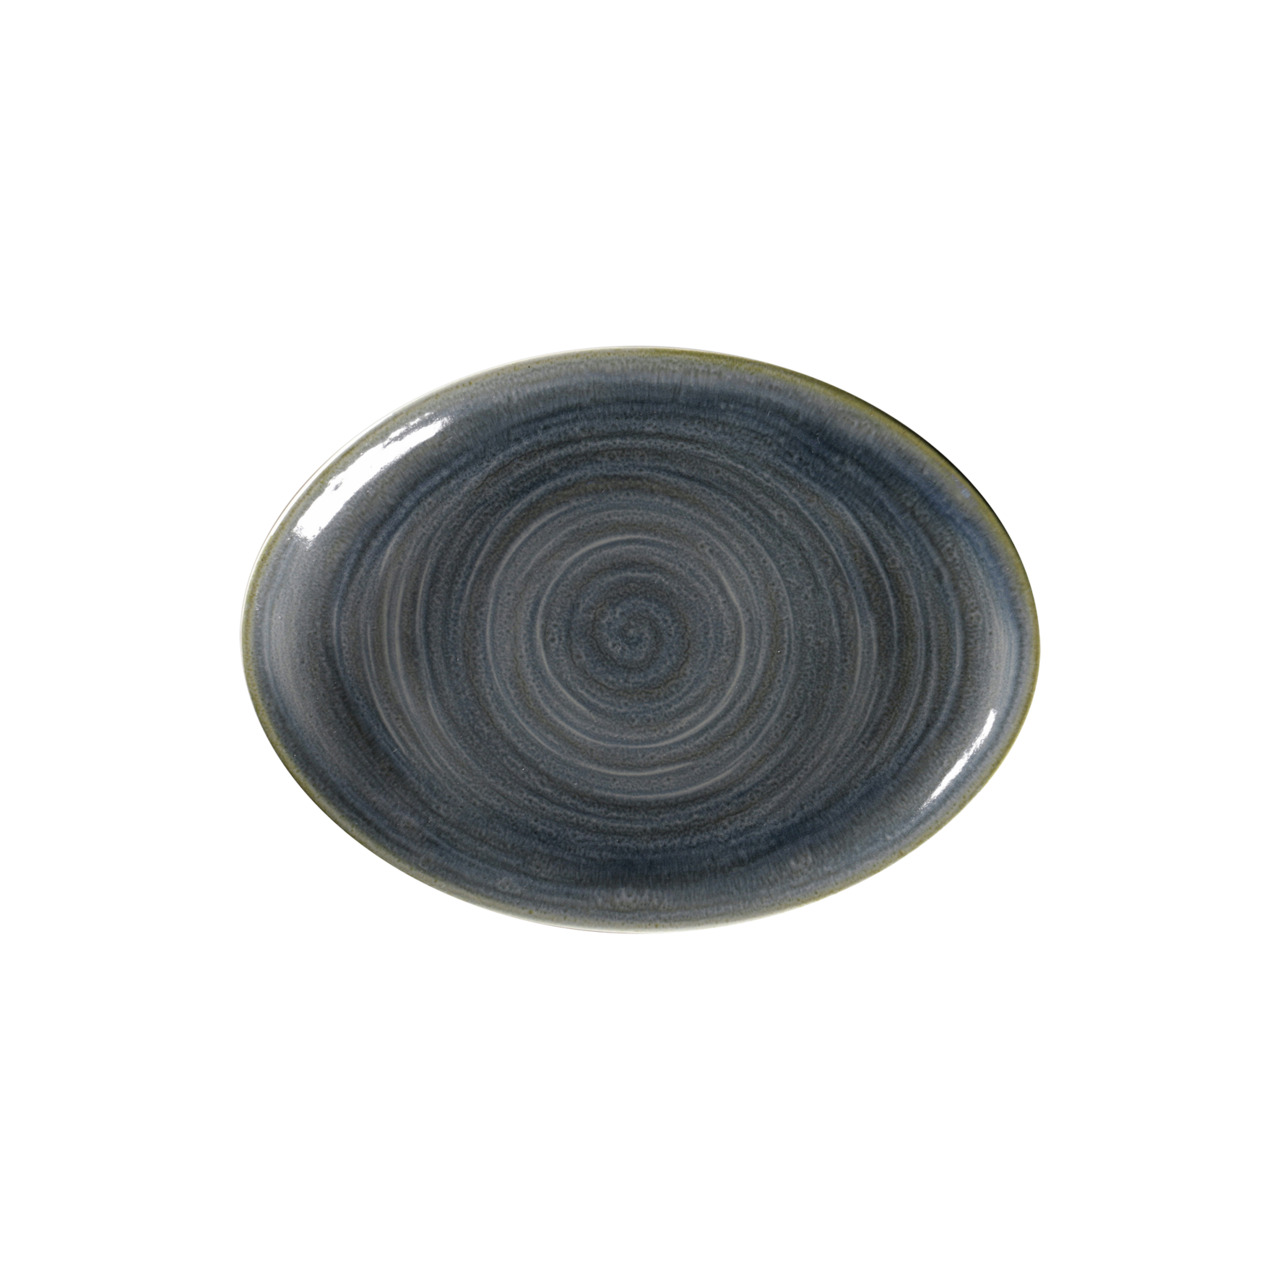 Spot, Platte oval 260 x 190 mm jade blue